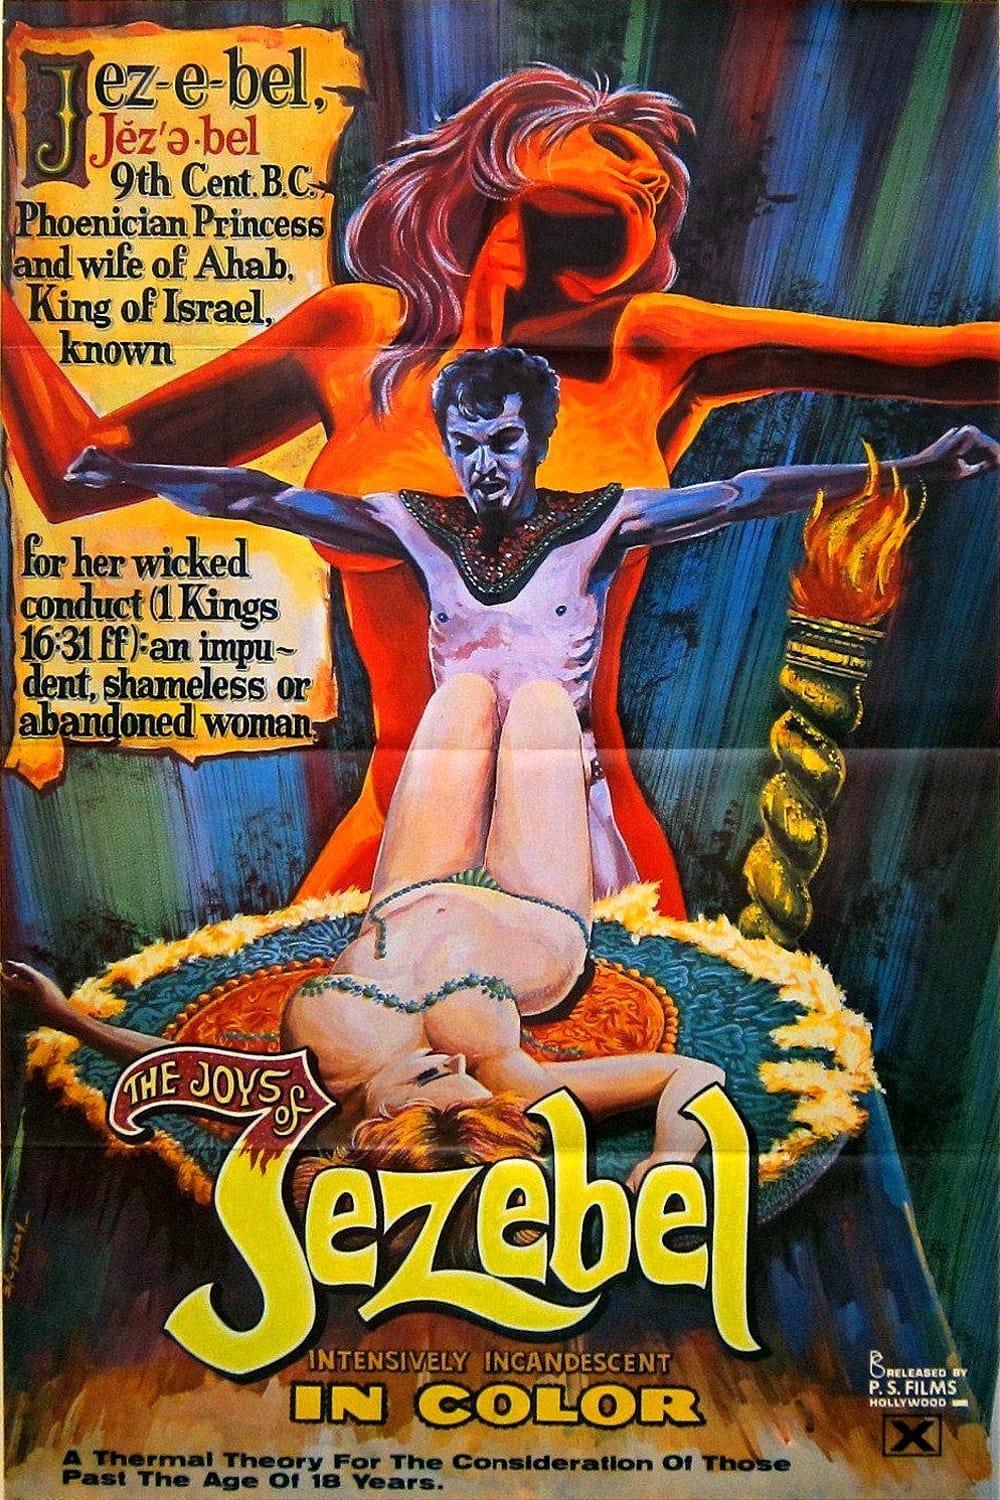 The Joys of Jezebel poster